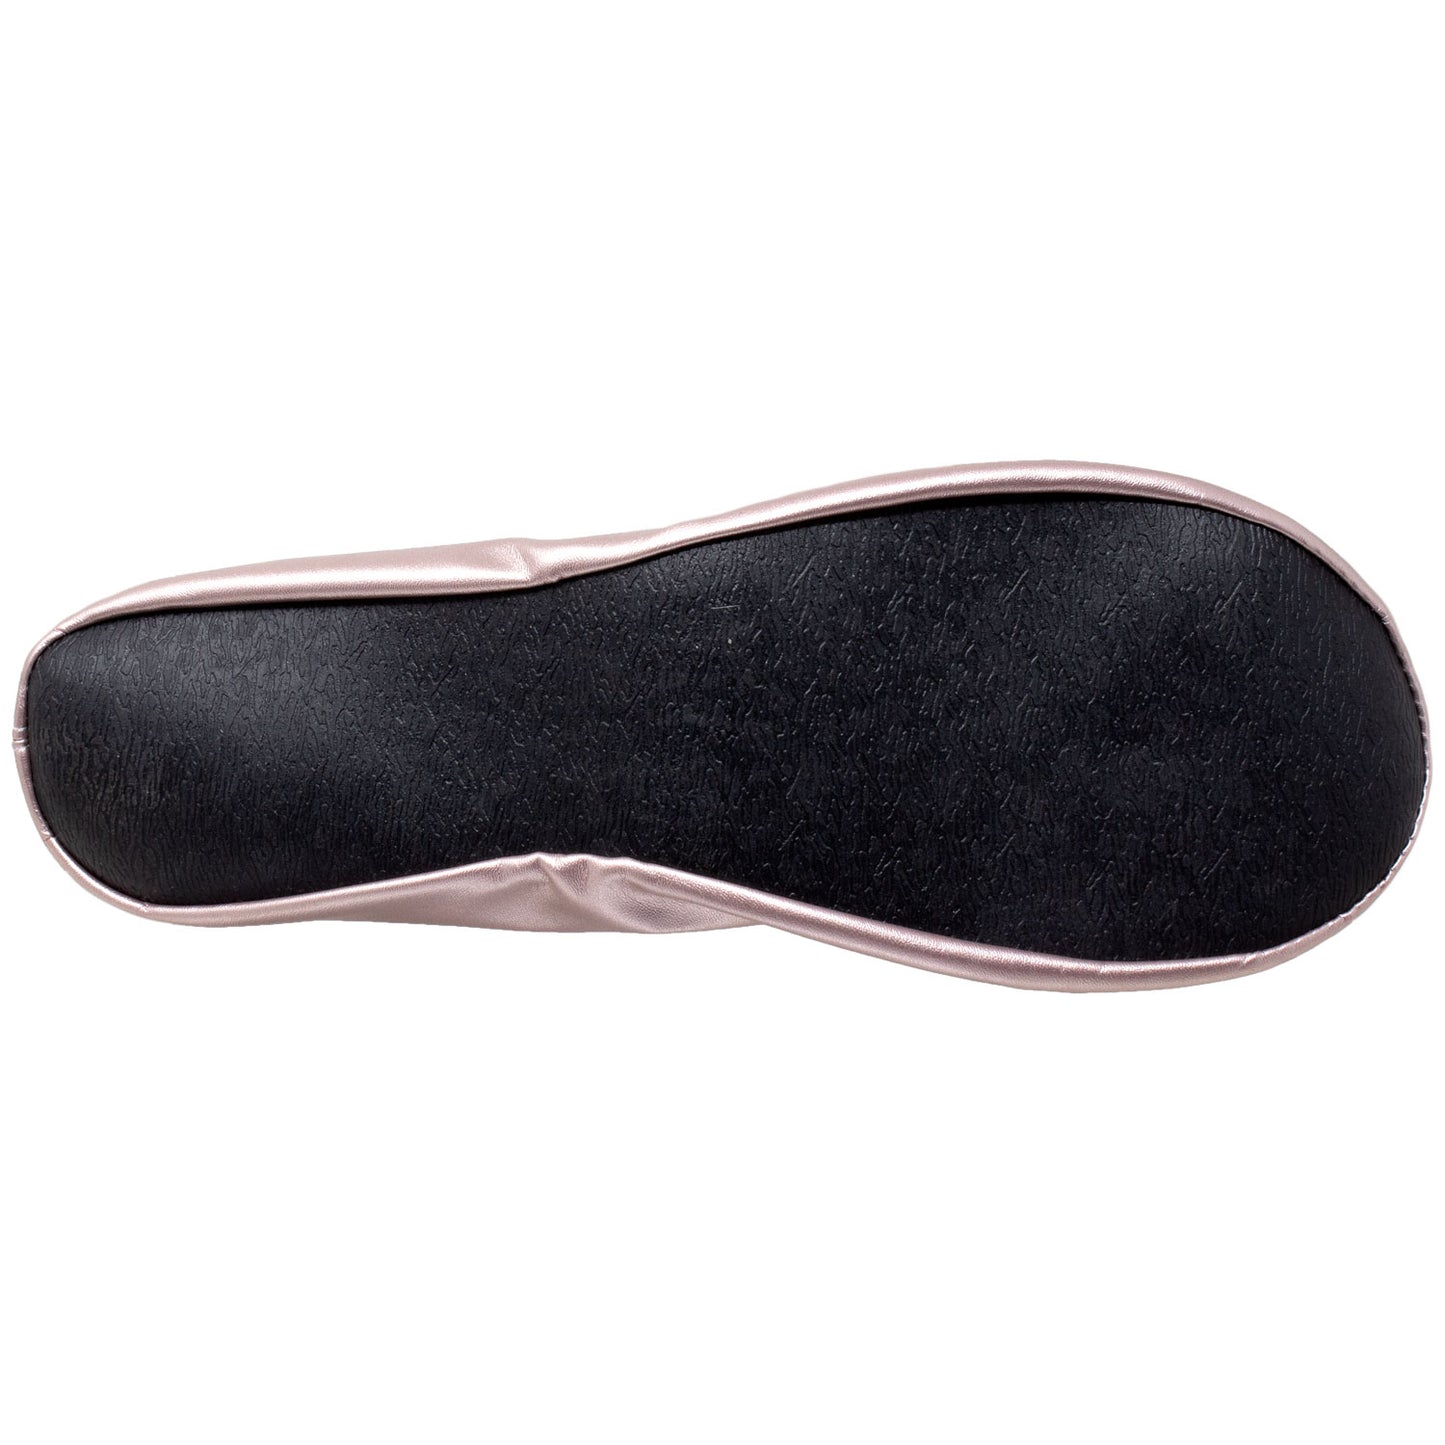 Foldable Ballet Flats Women's Travel Portable Comfortable Shoes Gold PU SOBEYO